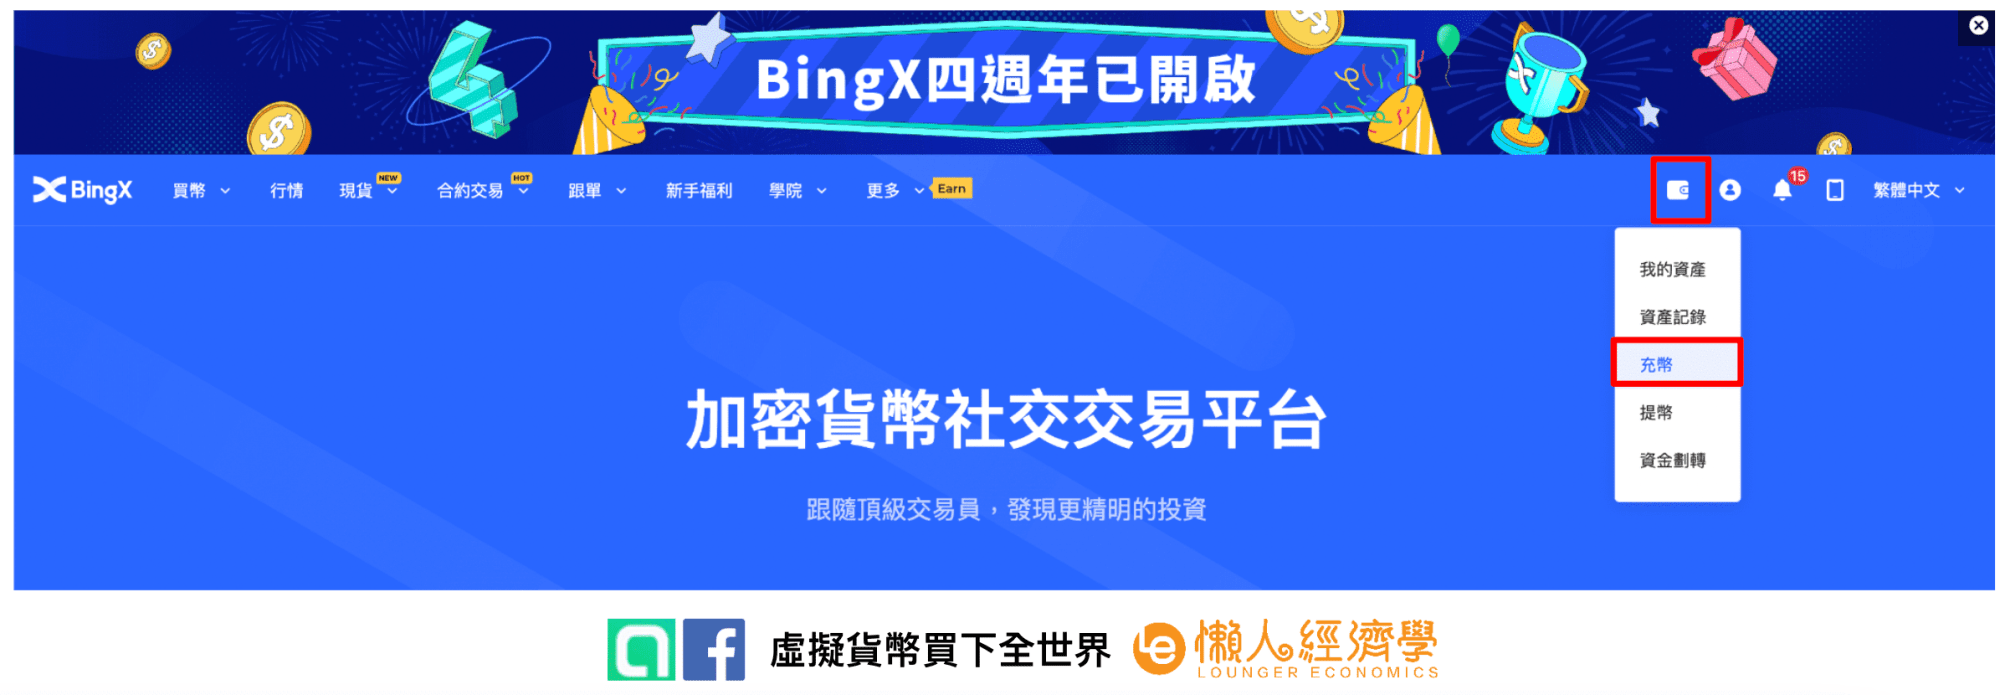 BingX 出金、入金方式介紹